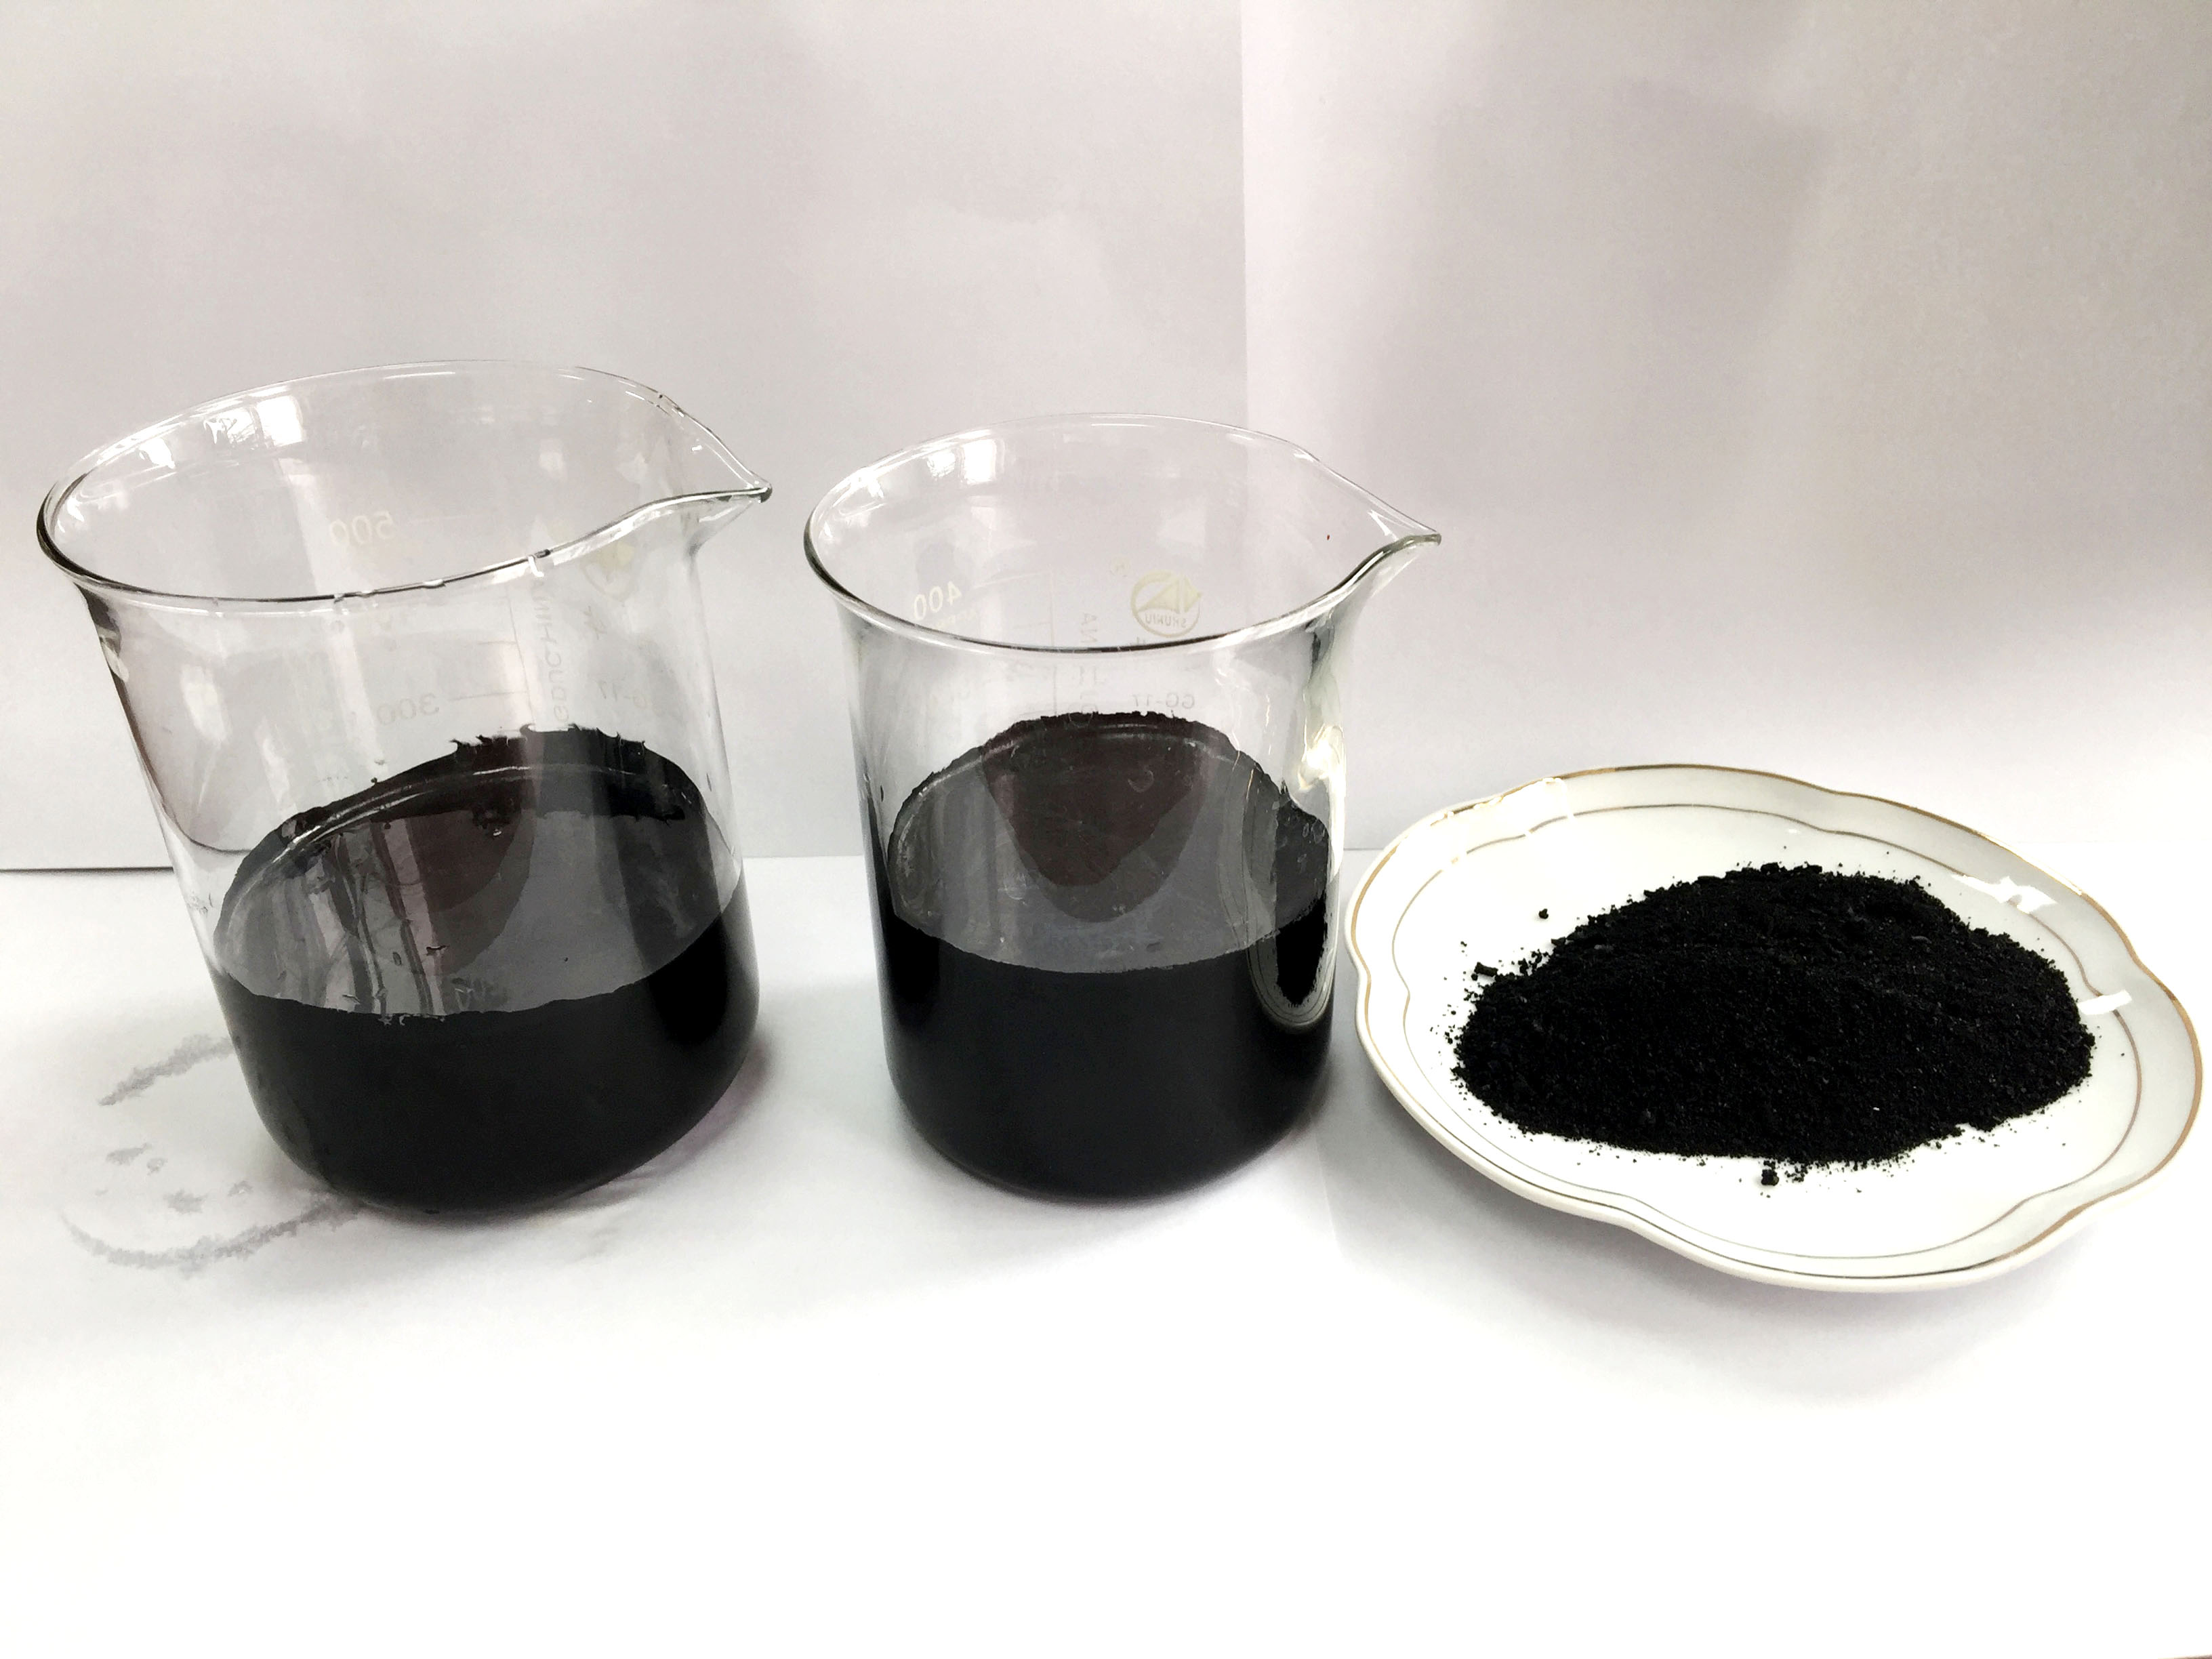 Sulphur Black Br production formula and precautions？